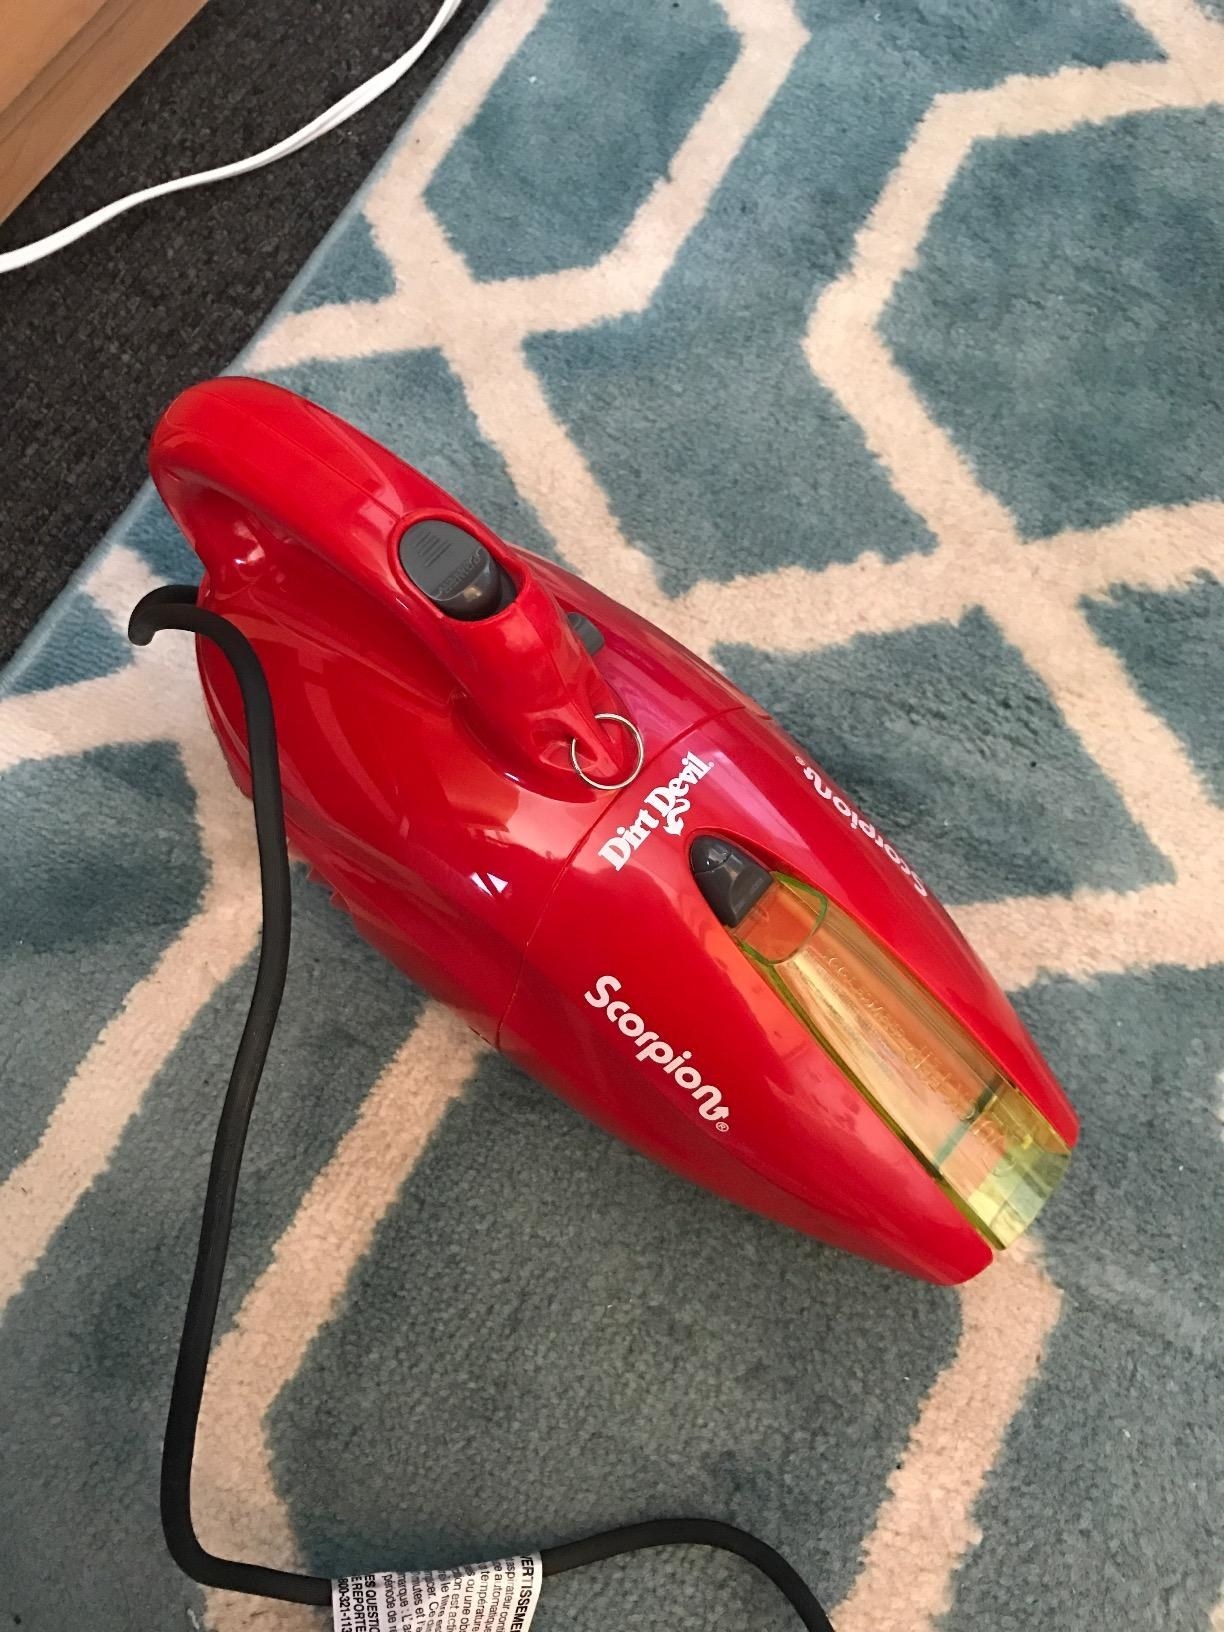 a red handheld dare devil vacuum